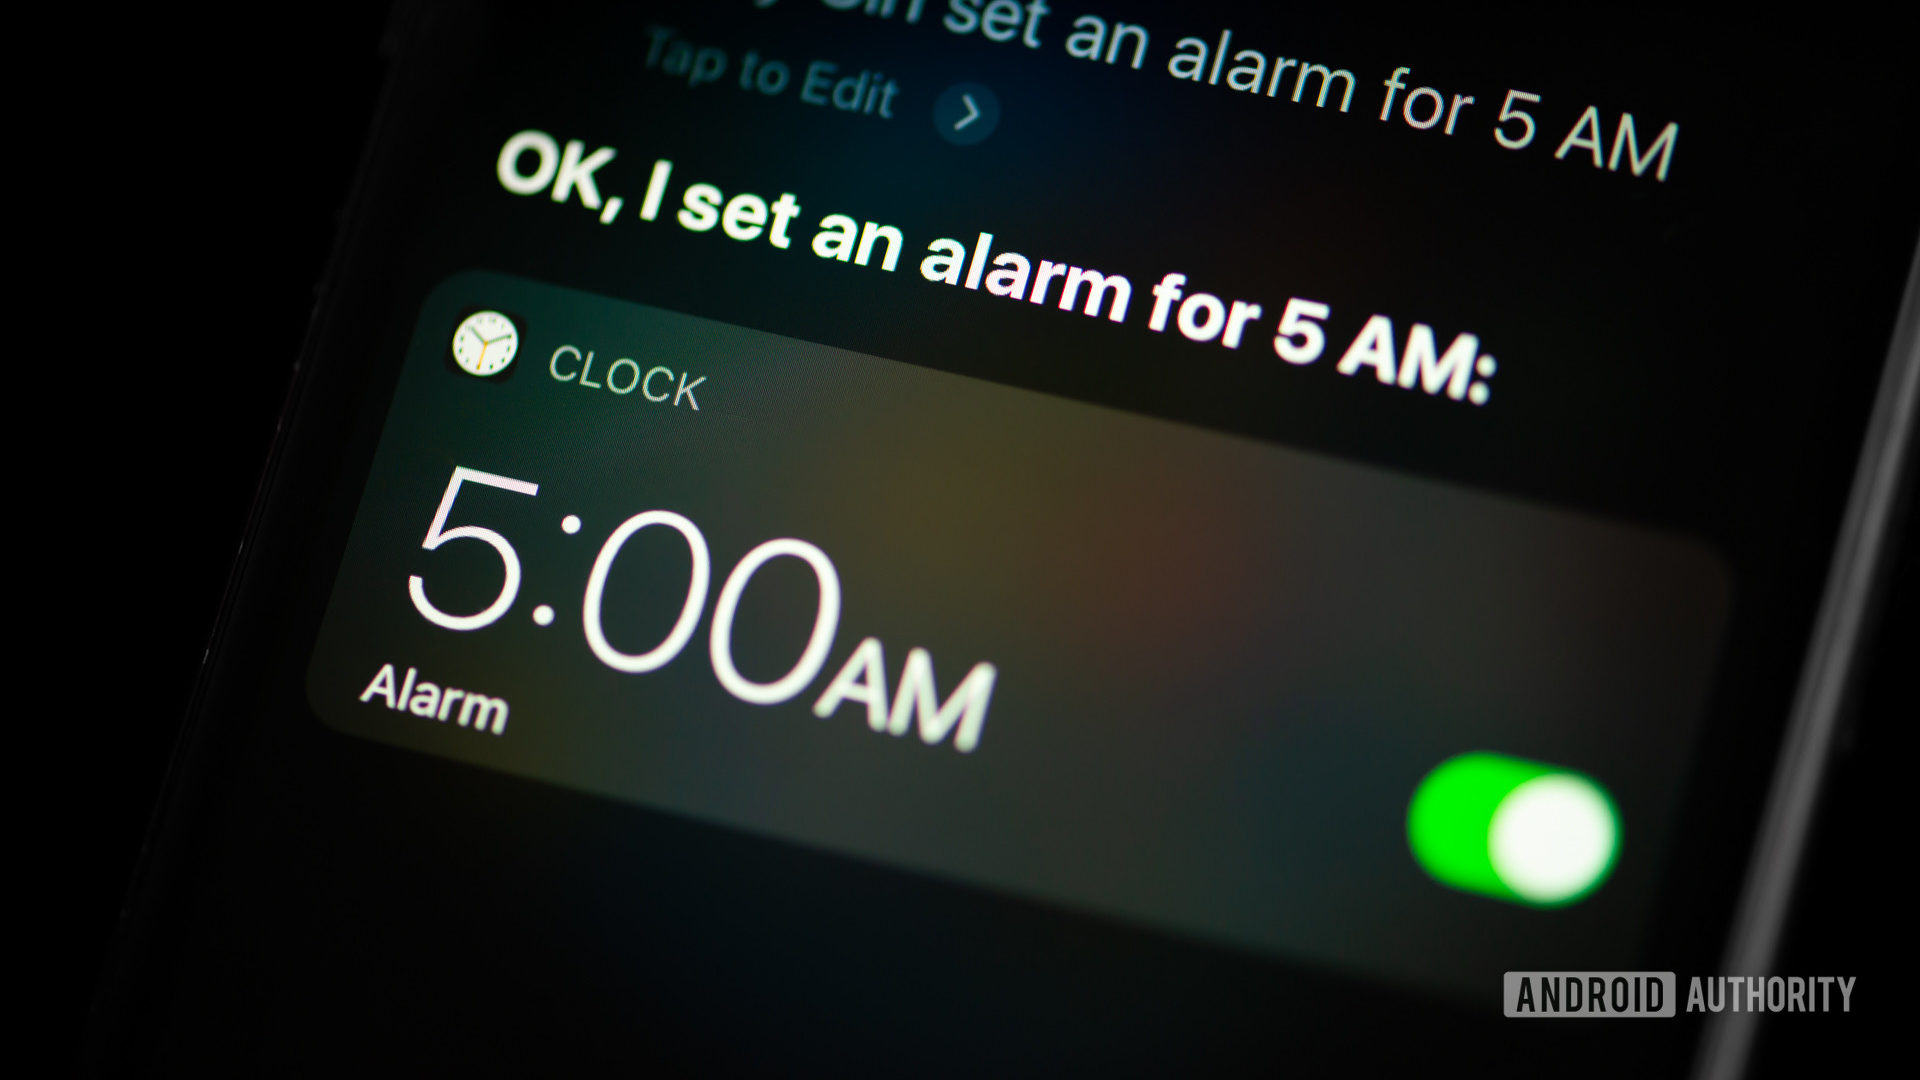 Siri command setting an alarm